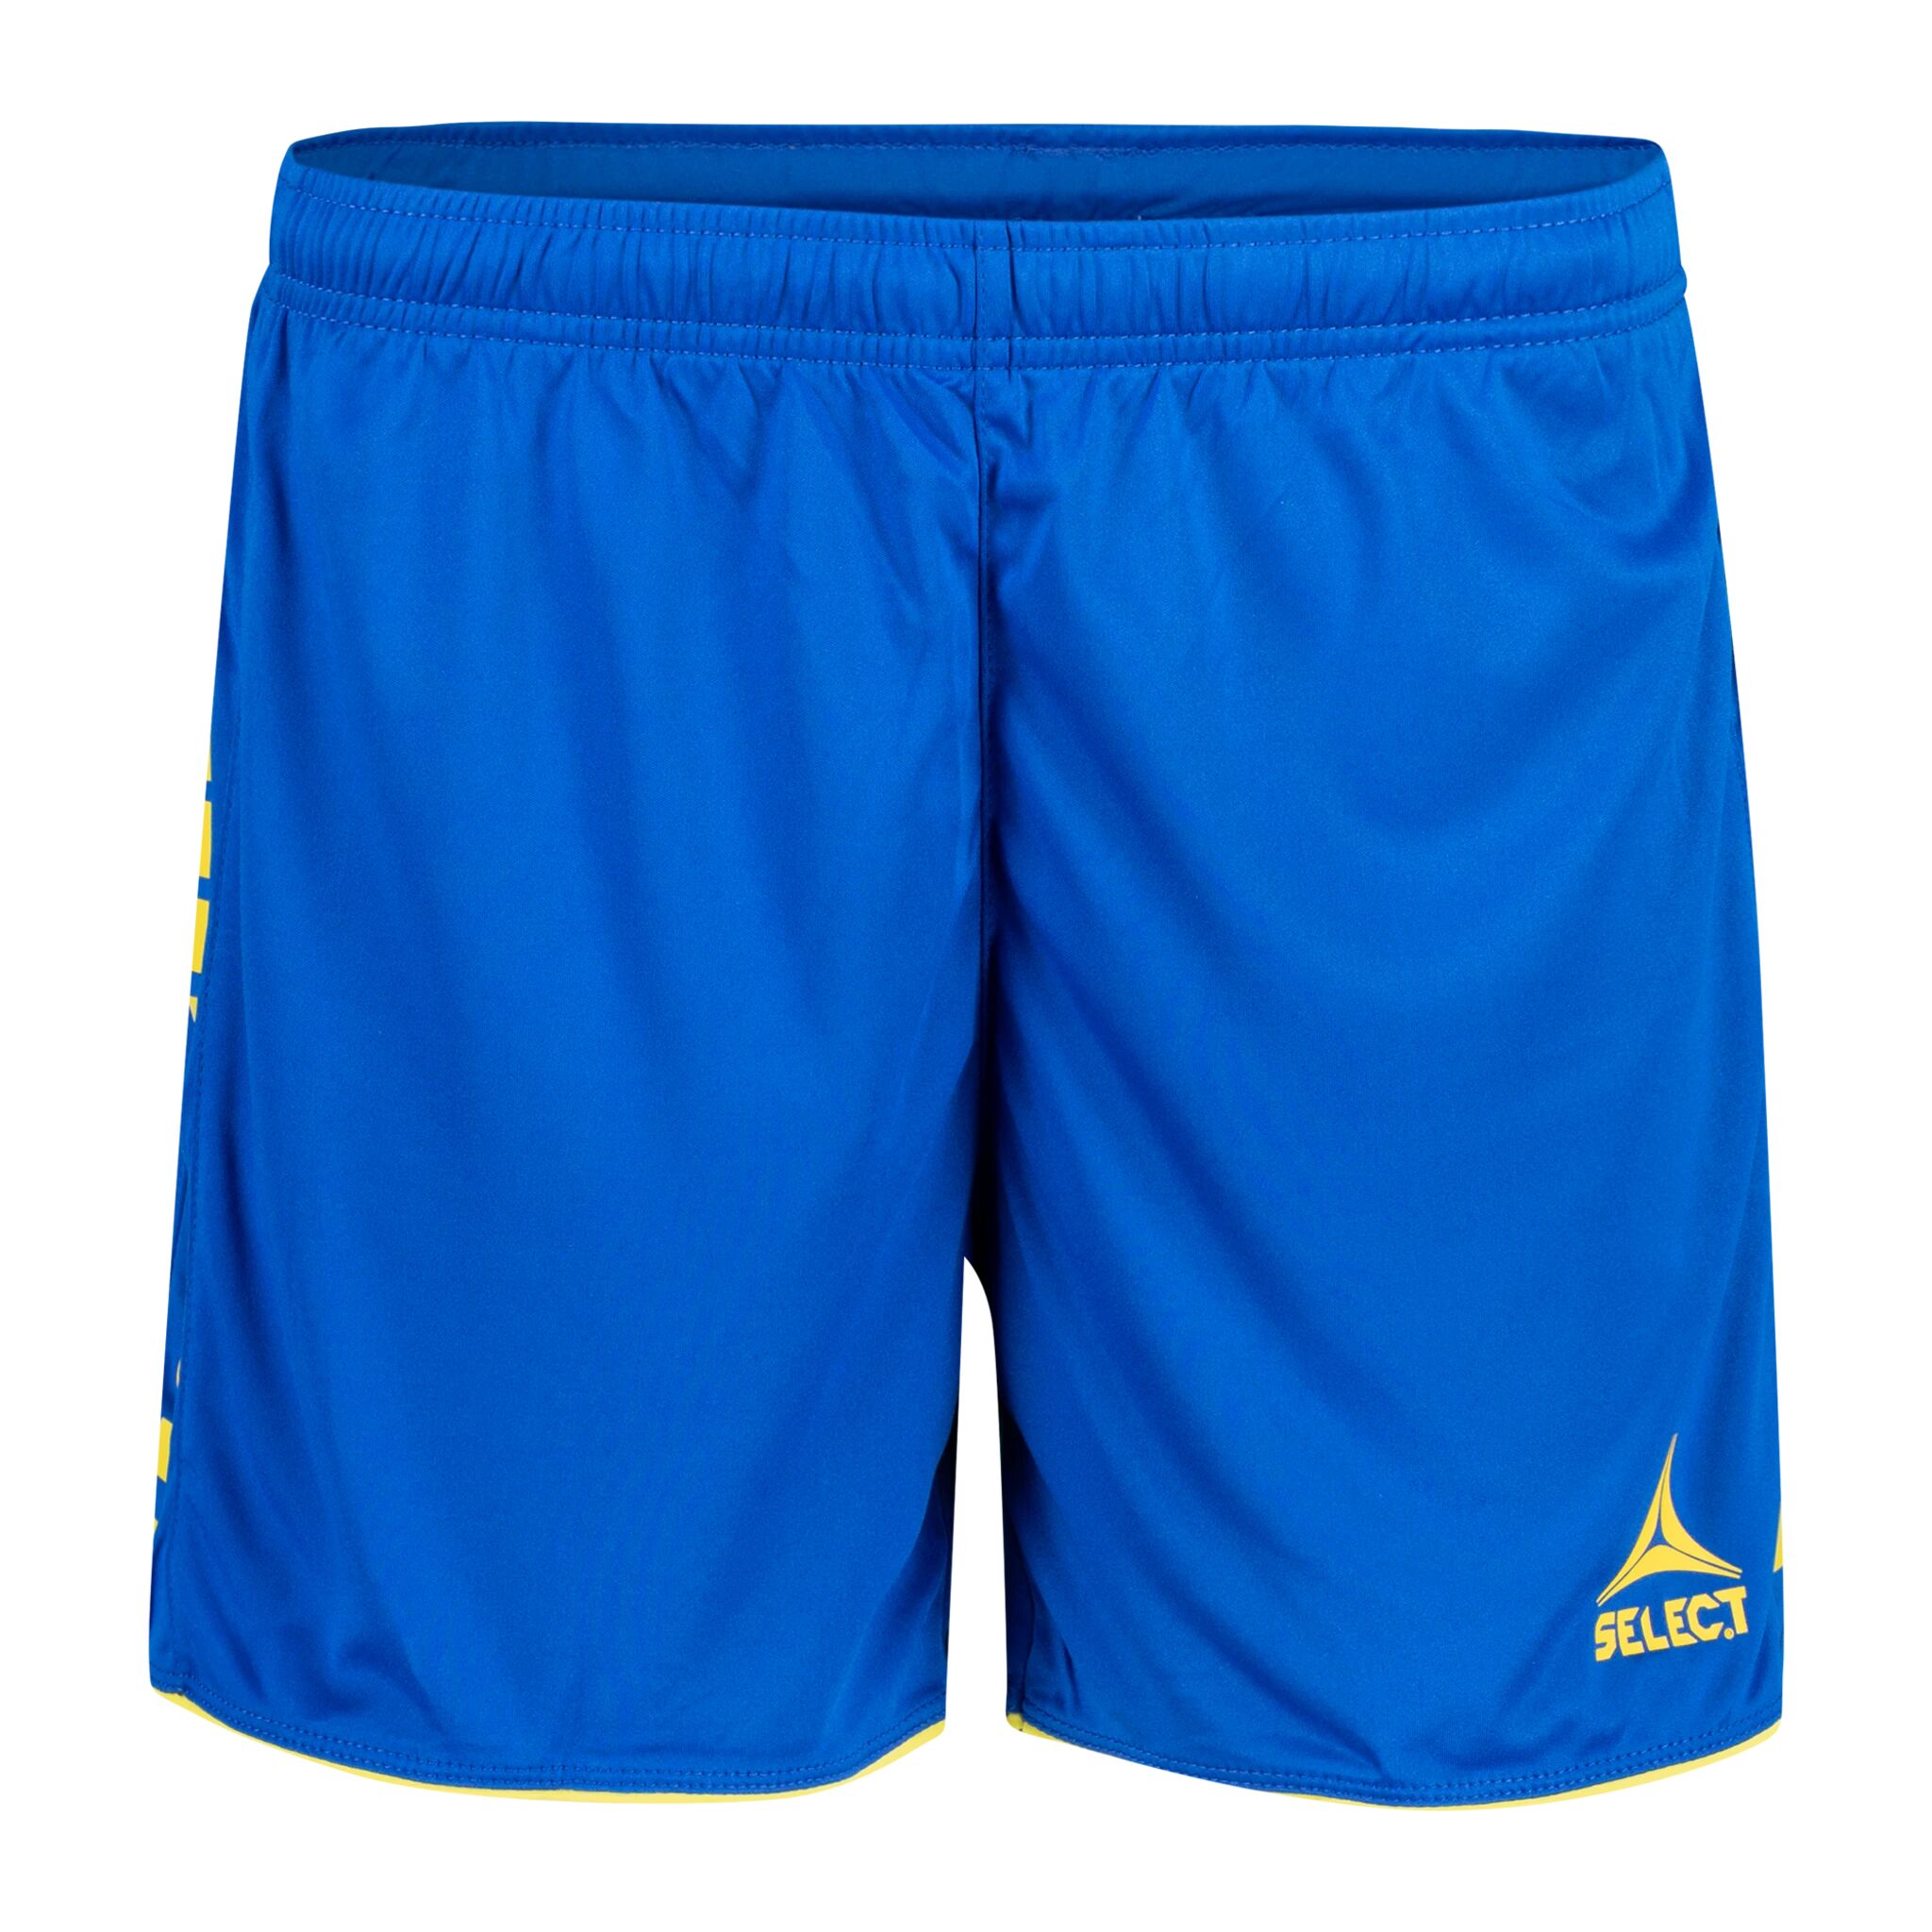 Select Player shorts Argentina, shorts dame L blue